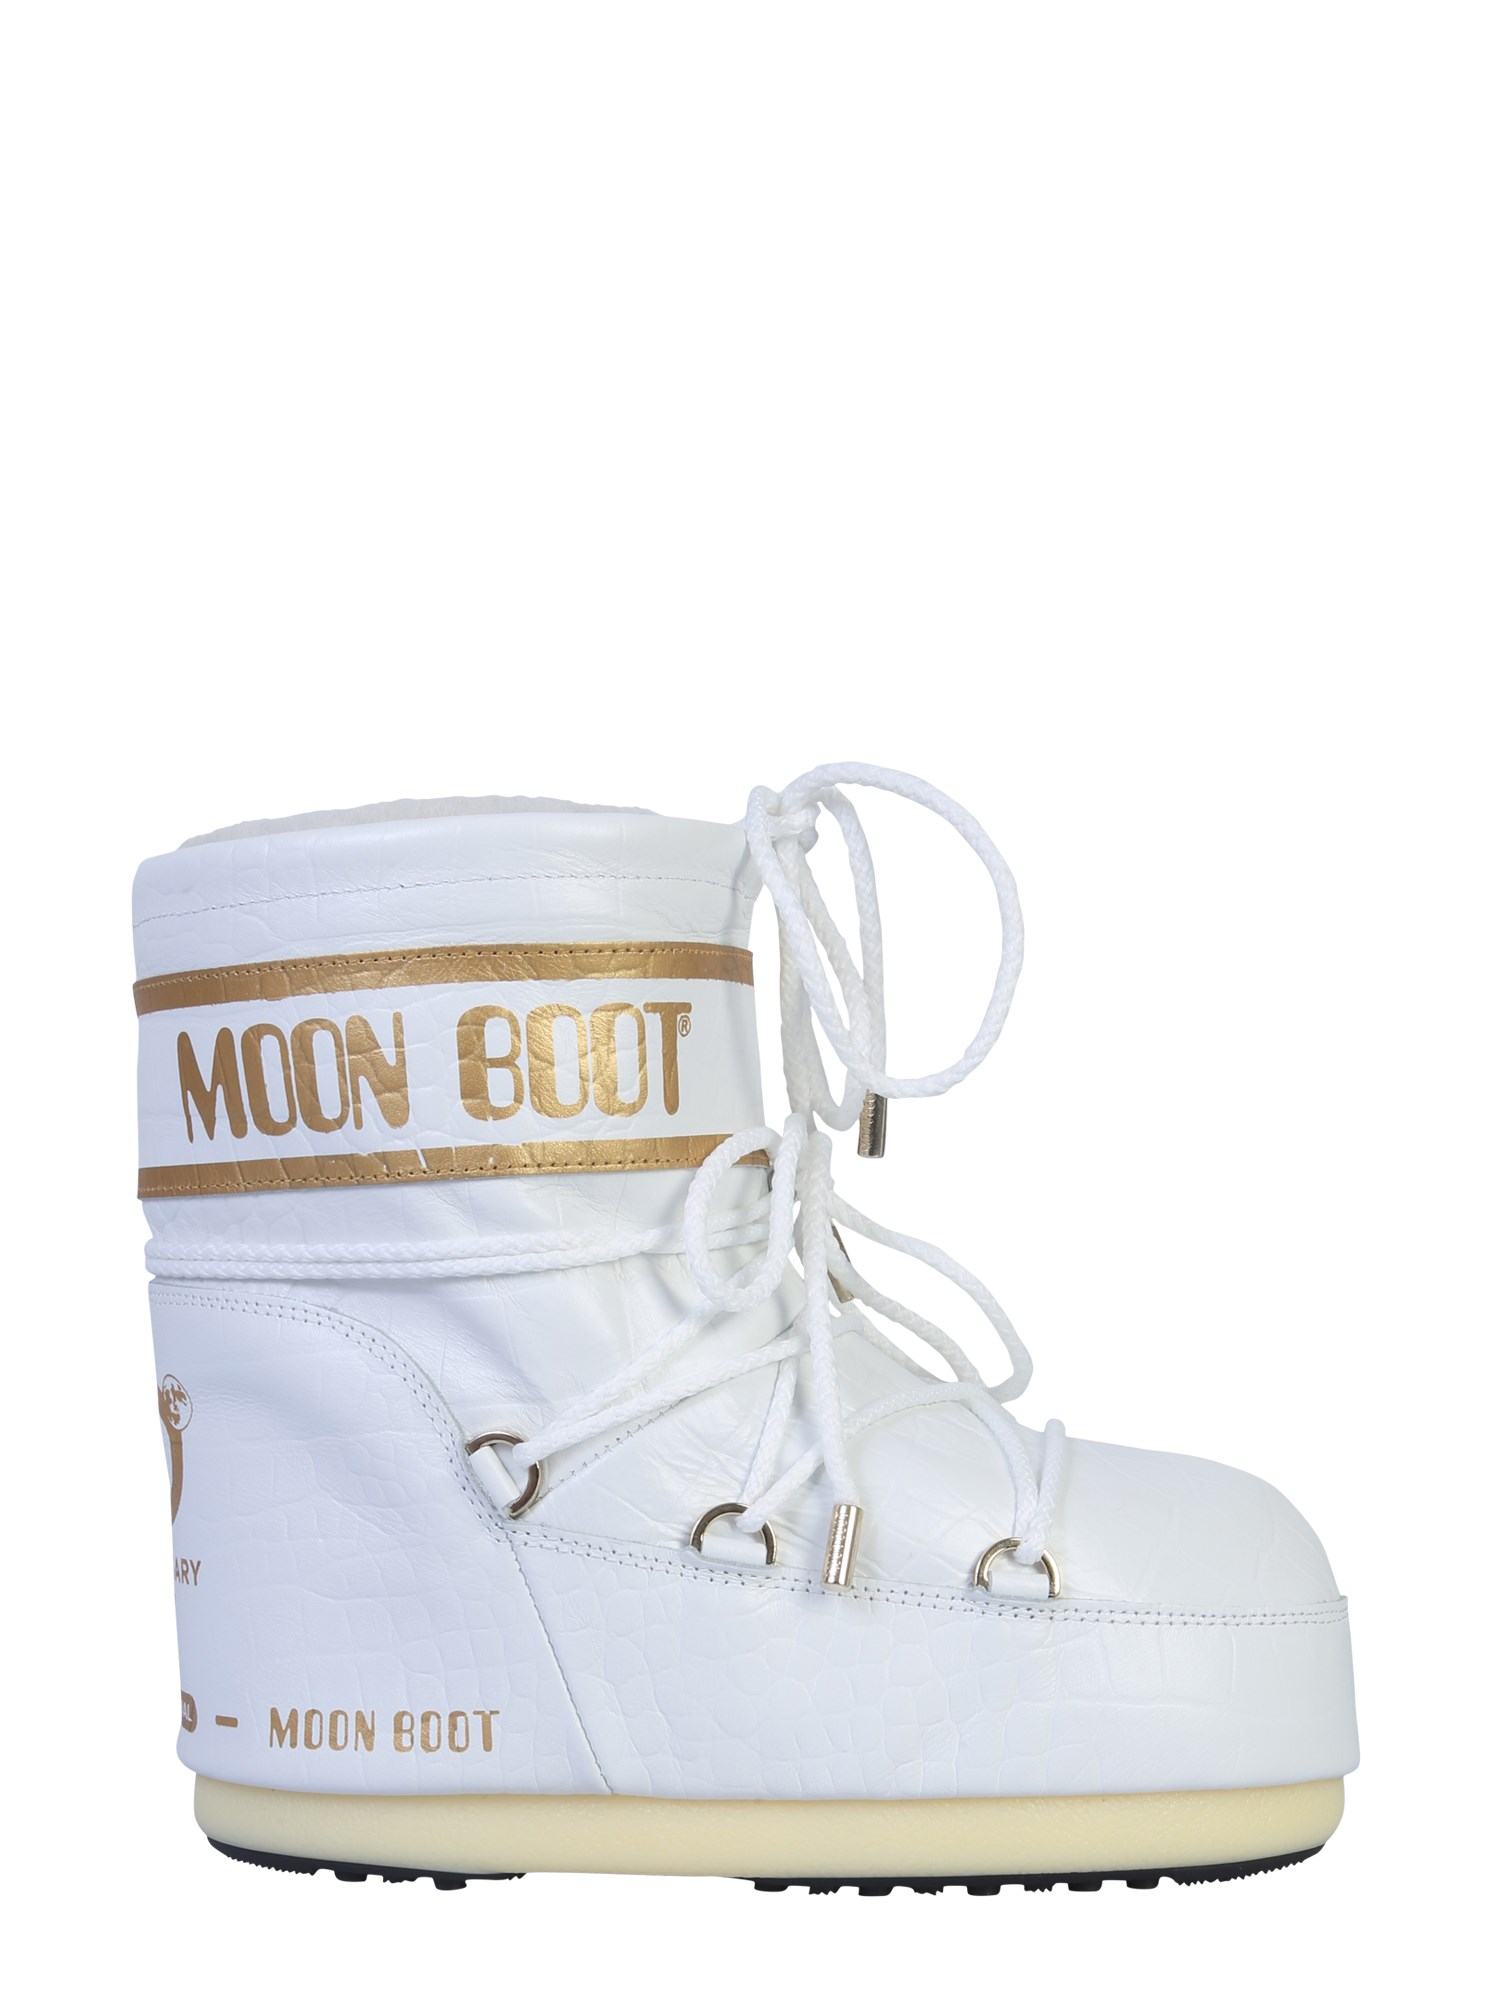 Moon Boot moon boot classic low moon boot